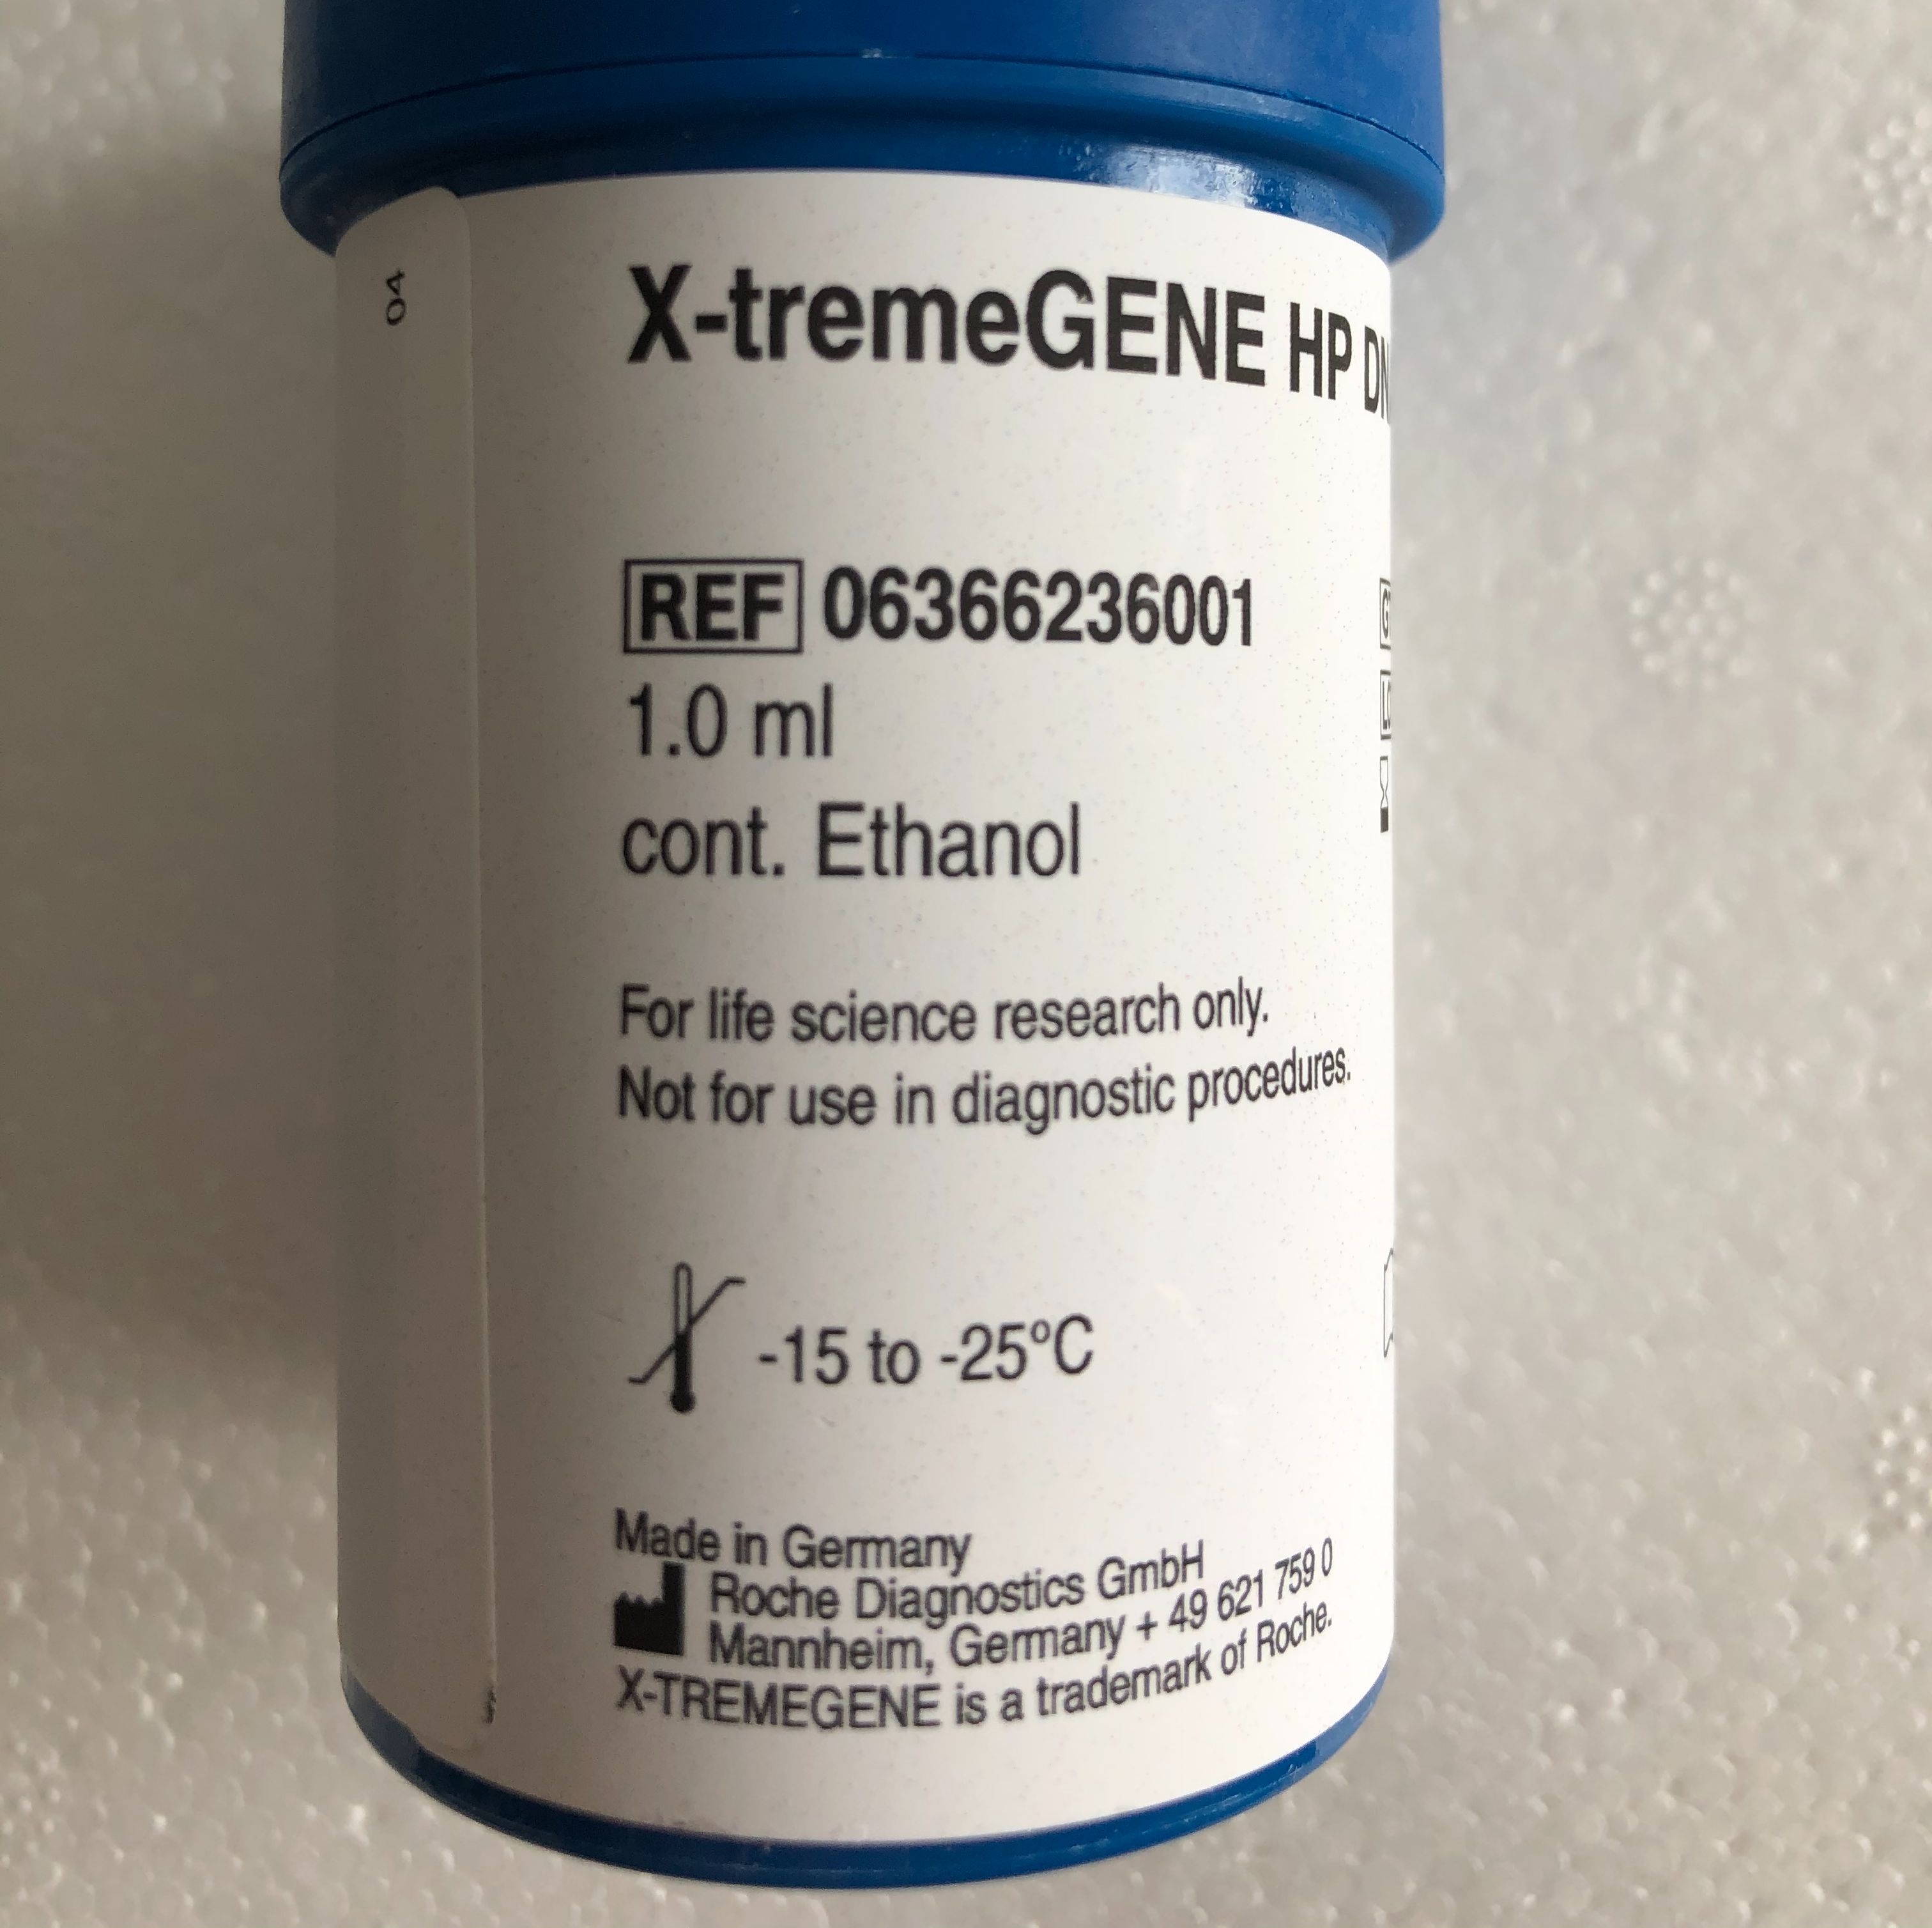 Roche货号6366236001转染试剂X-tremeGENE上海睿安13611631389